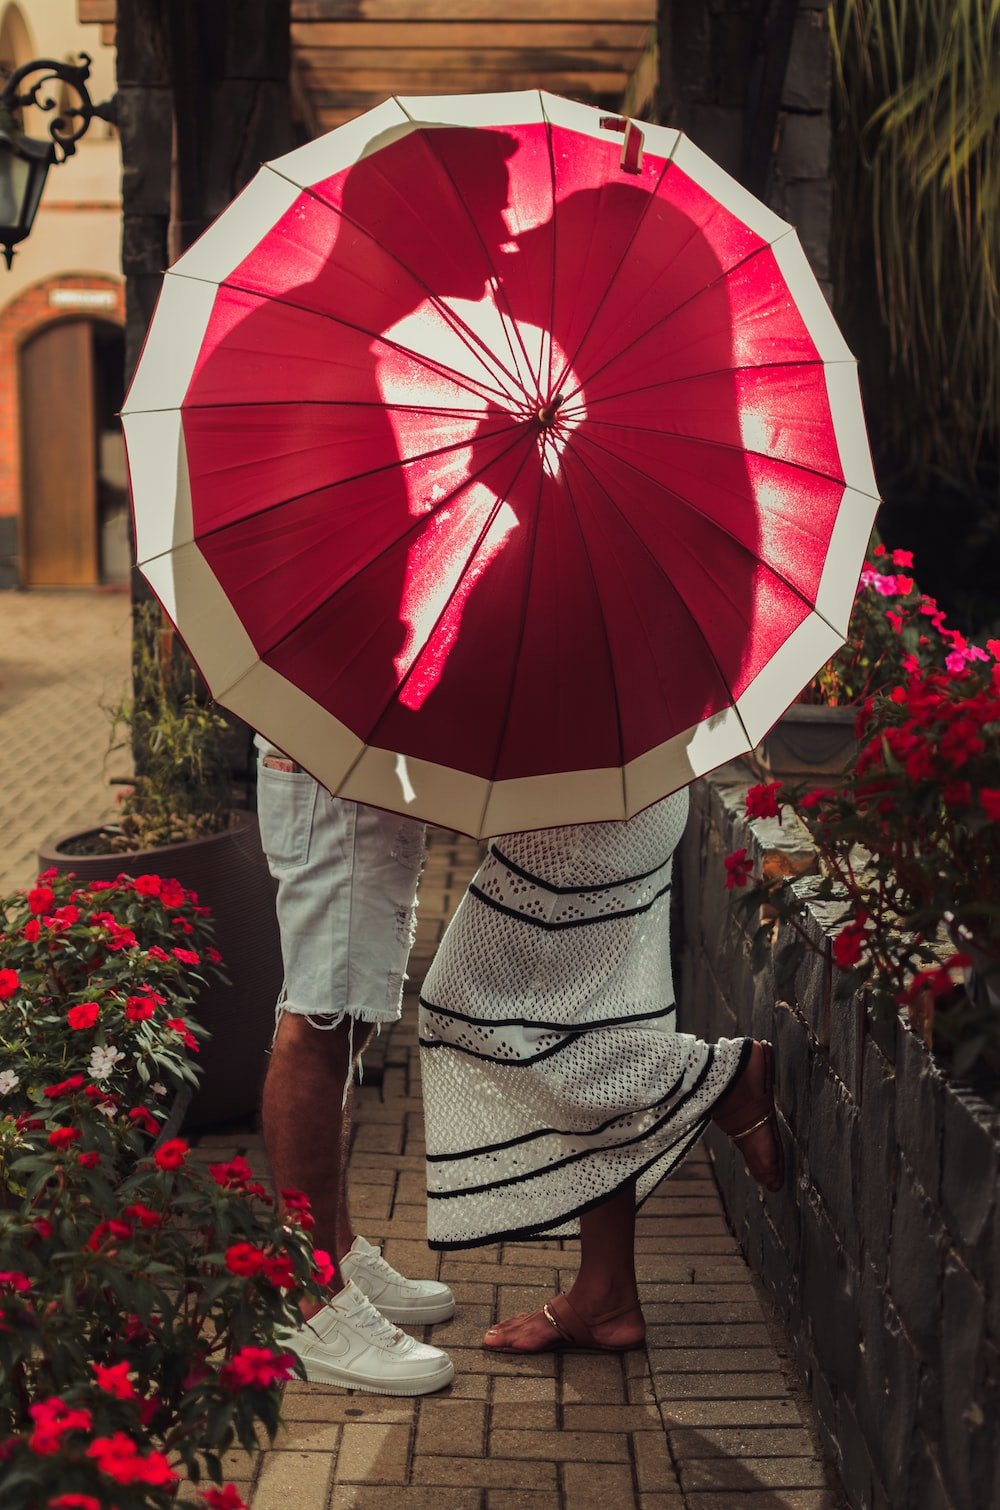 The Perfect Valentine Gift - a heart Shaped Umbrella. Image source: Unsplash